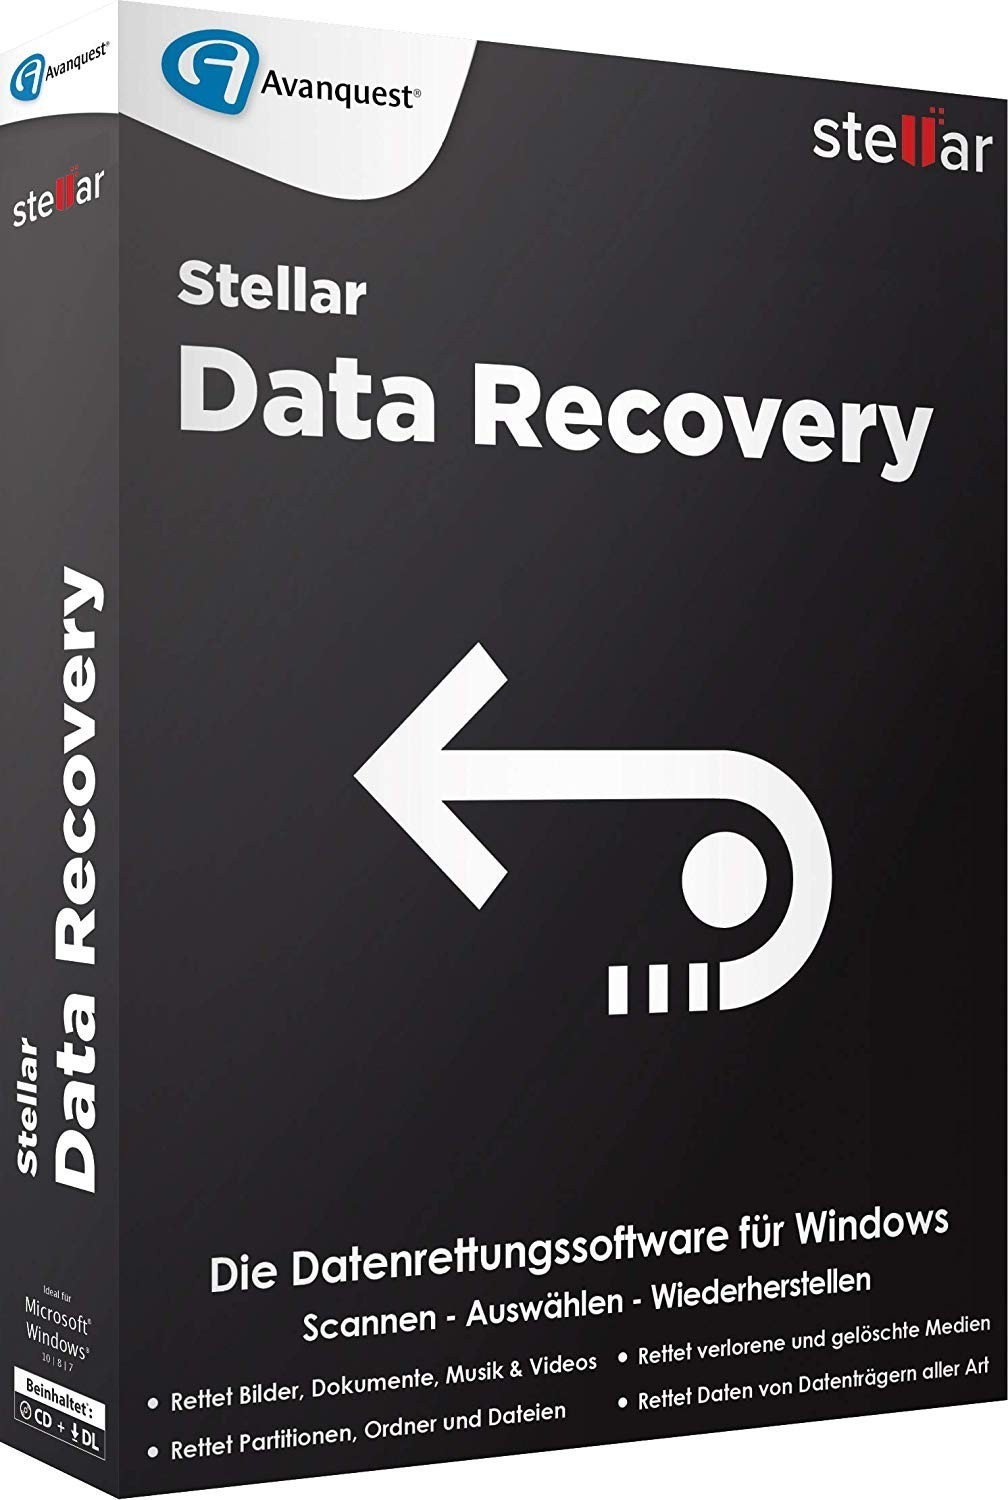 stellar data recovery professional 8.0.0.2 crack